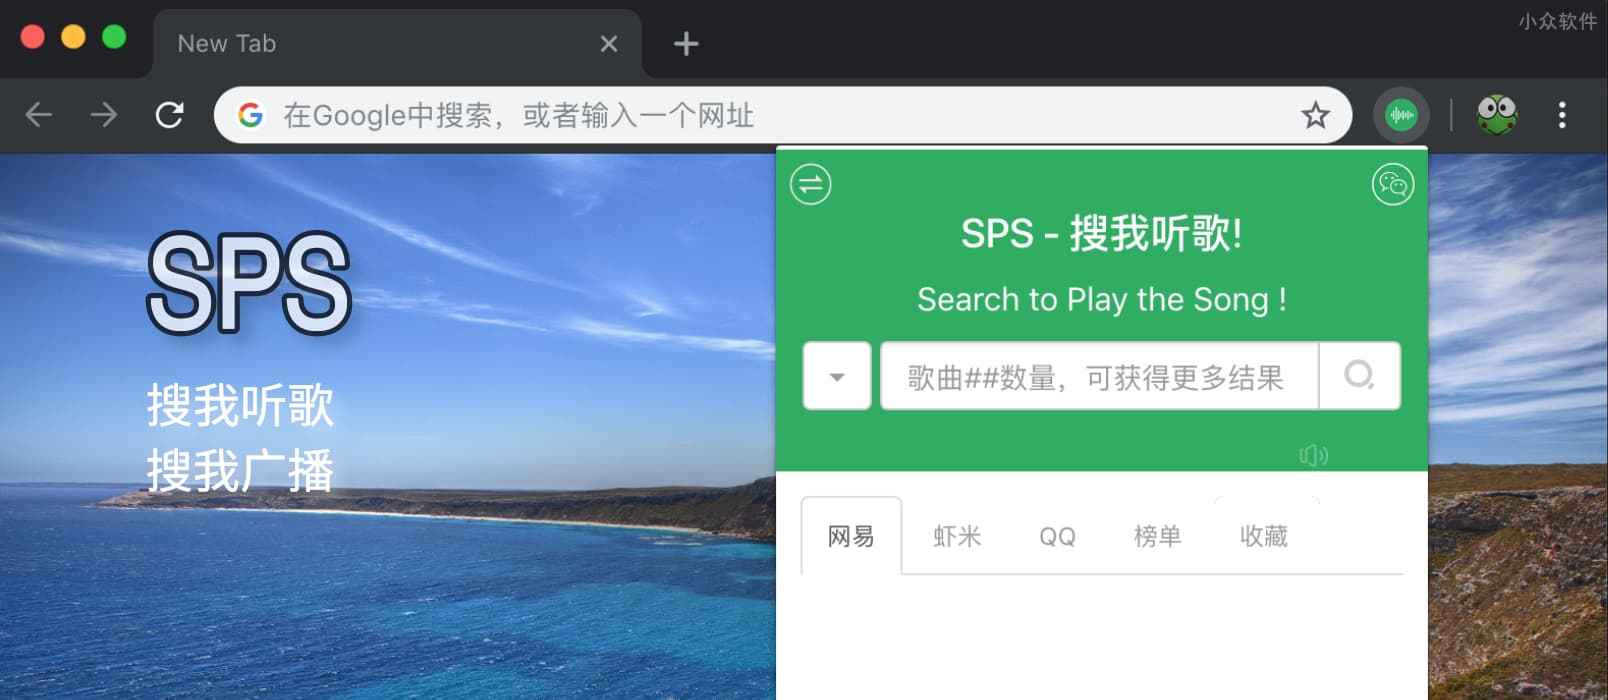 SPS - 搜我听歌，搜我电台，Chrome 上的极简听歌扩展 1